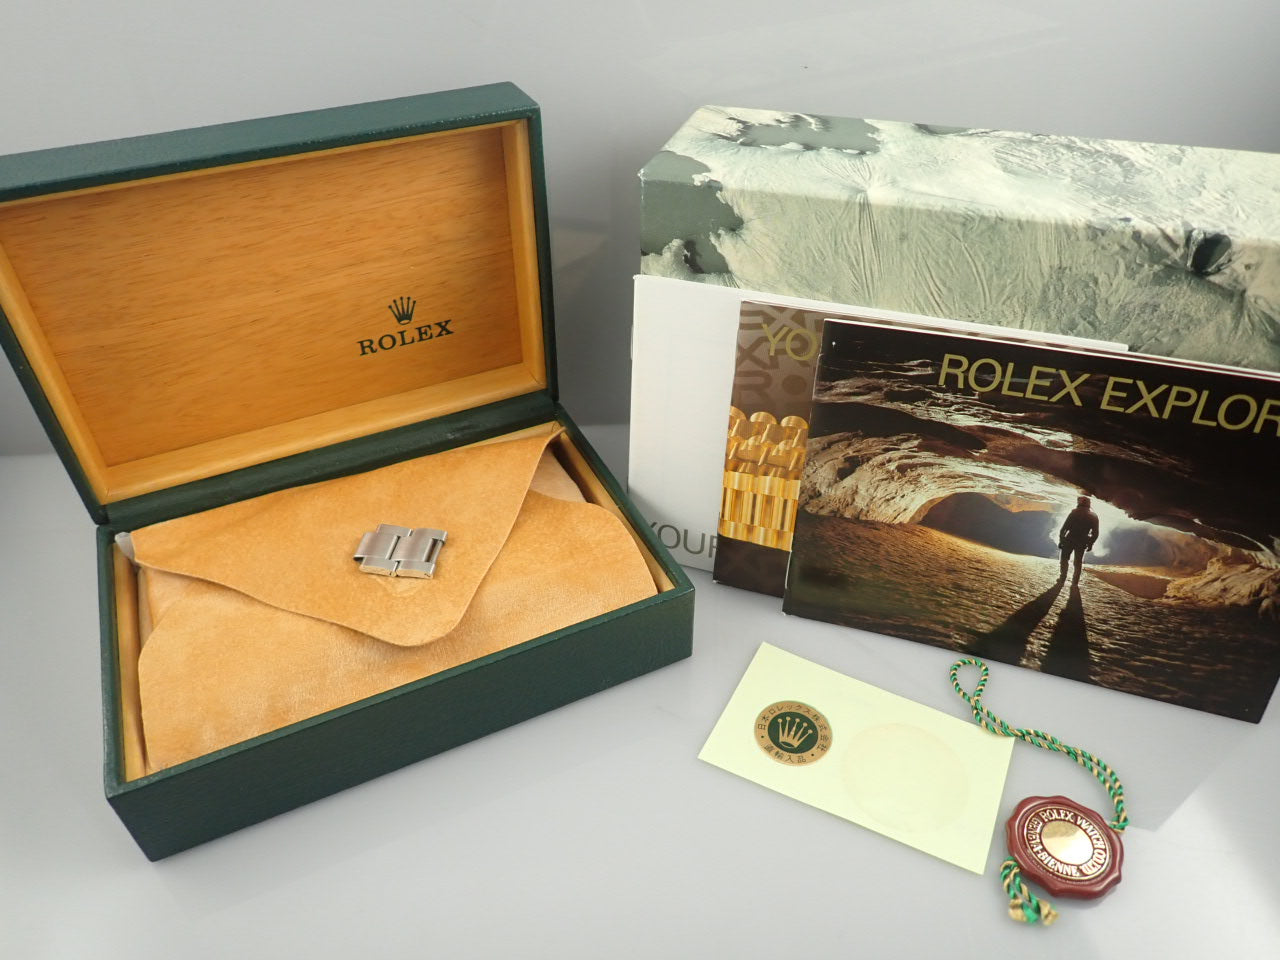 Rolex Explorer IS number &lt;Box and other details&gt;